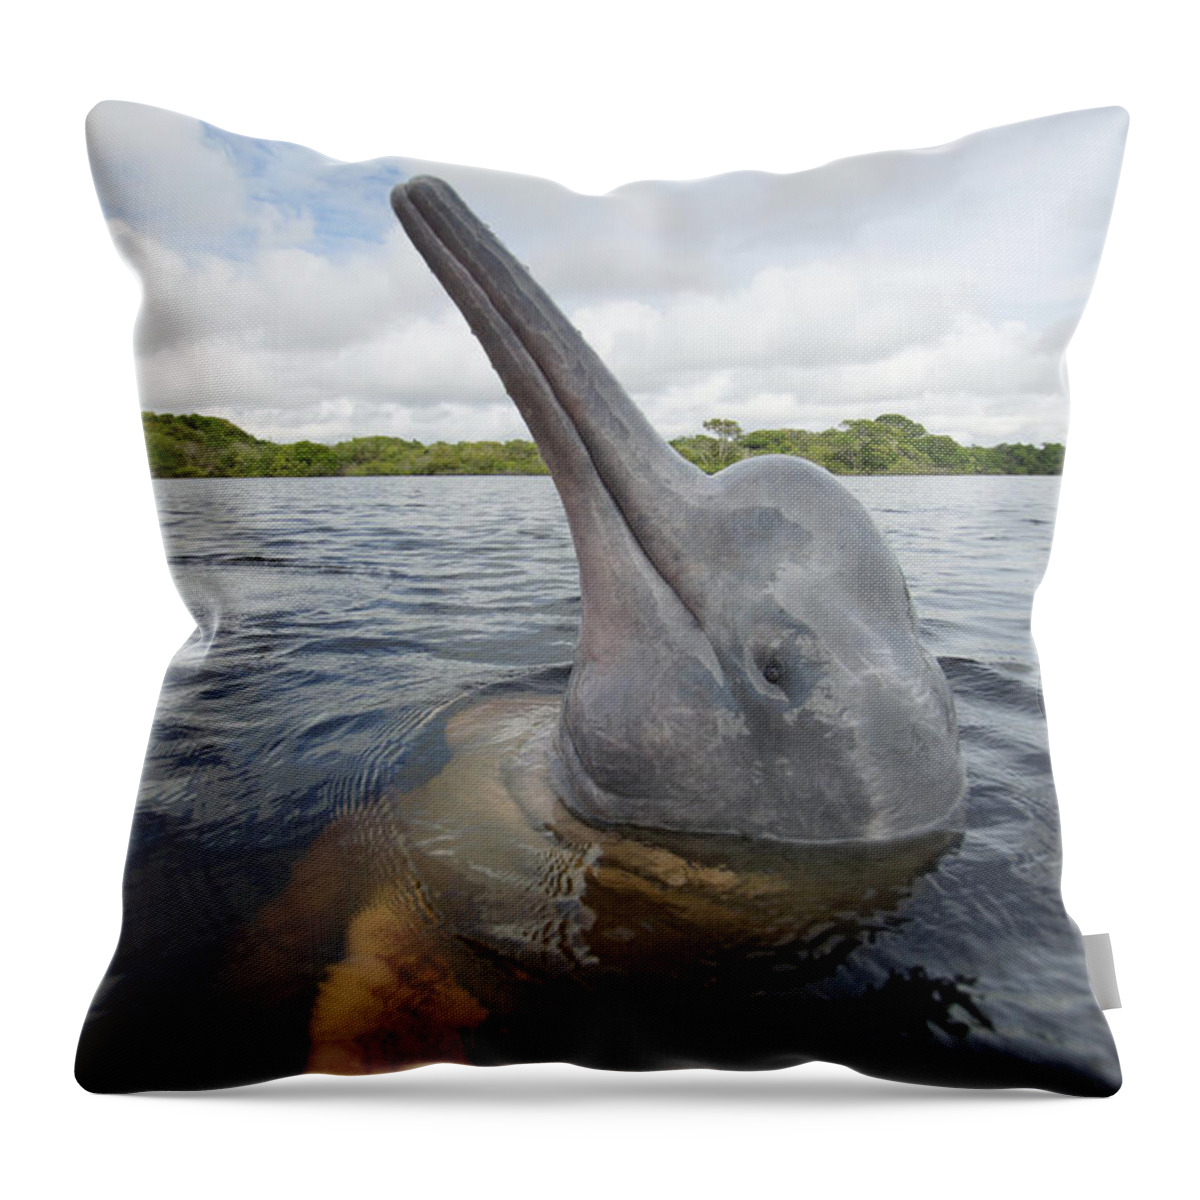 Feb0514 Throw Pillow featuring the photograph Amazon River Dolphin Spy-hopping Rio by Hiroya Minakuchi